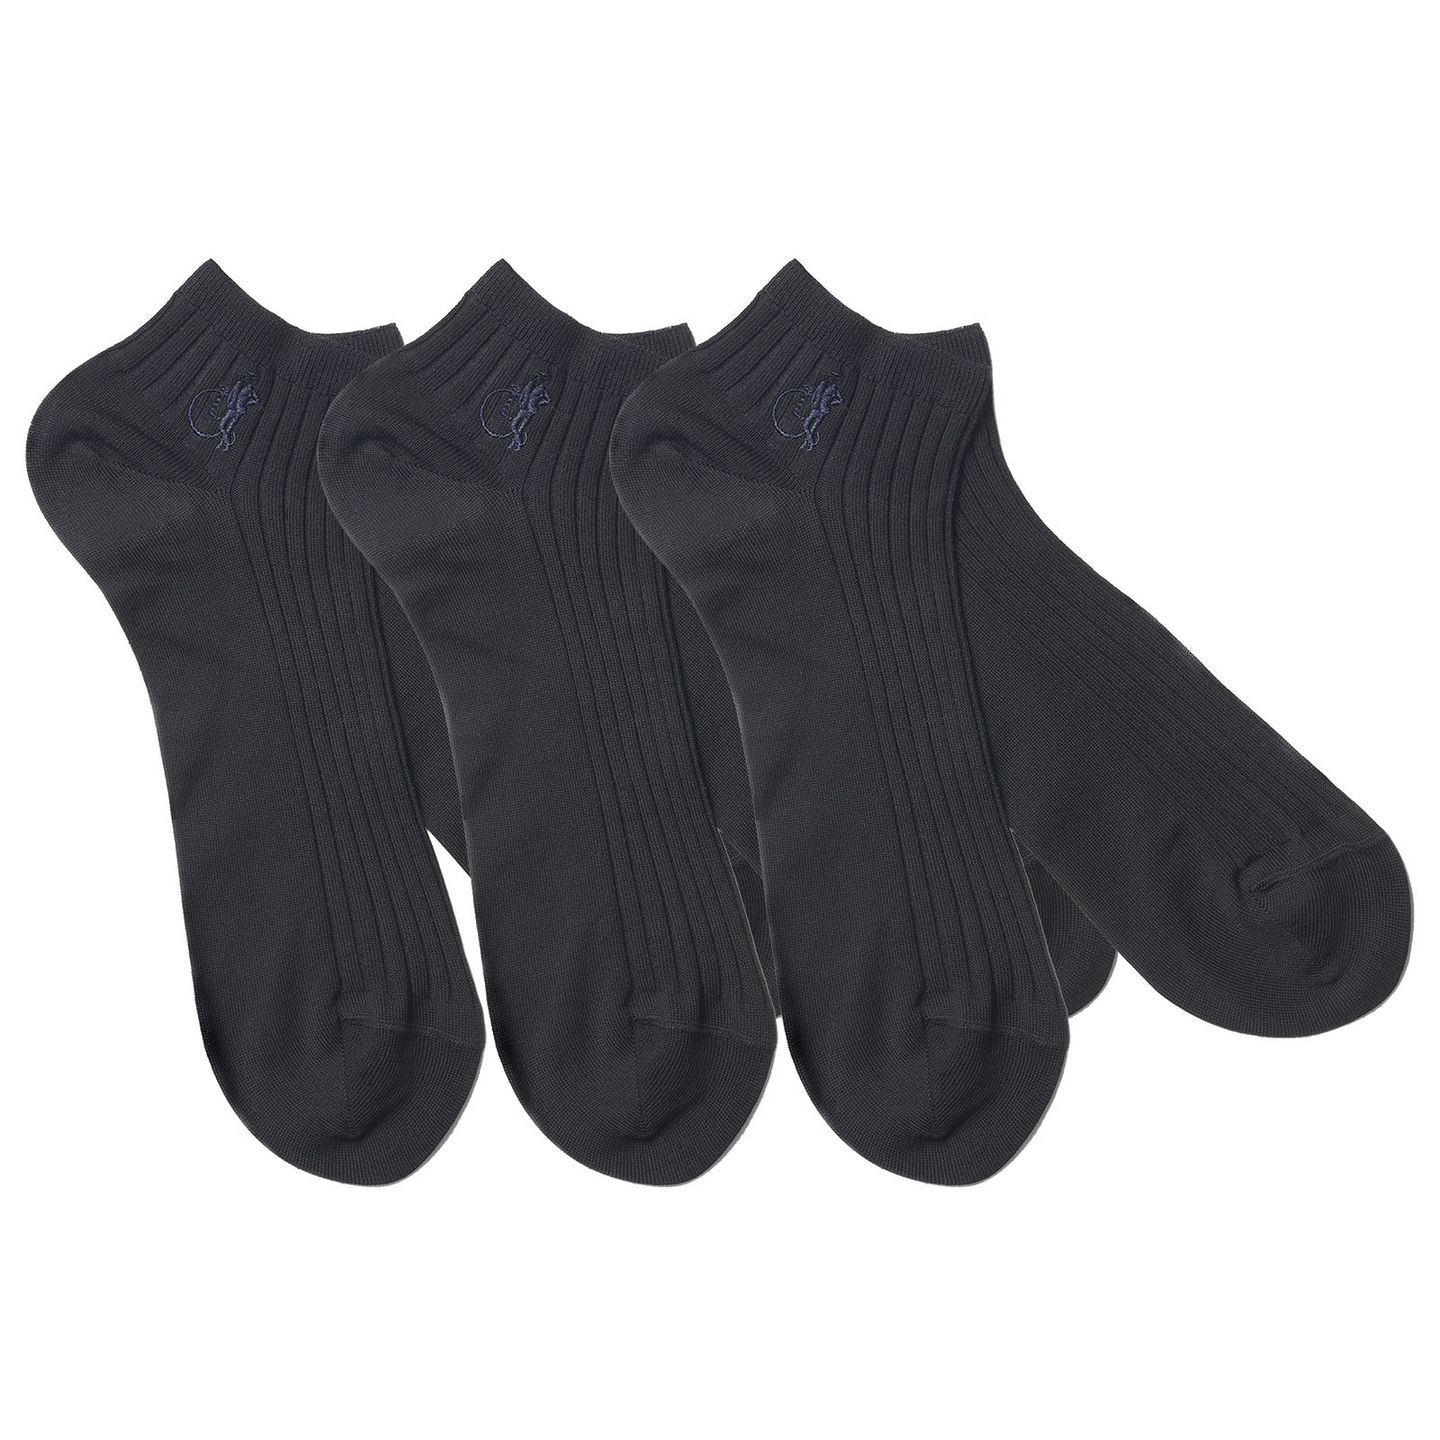 3 pairs of simply black trainer socks for men